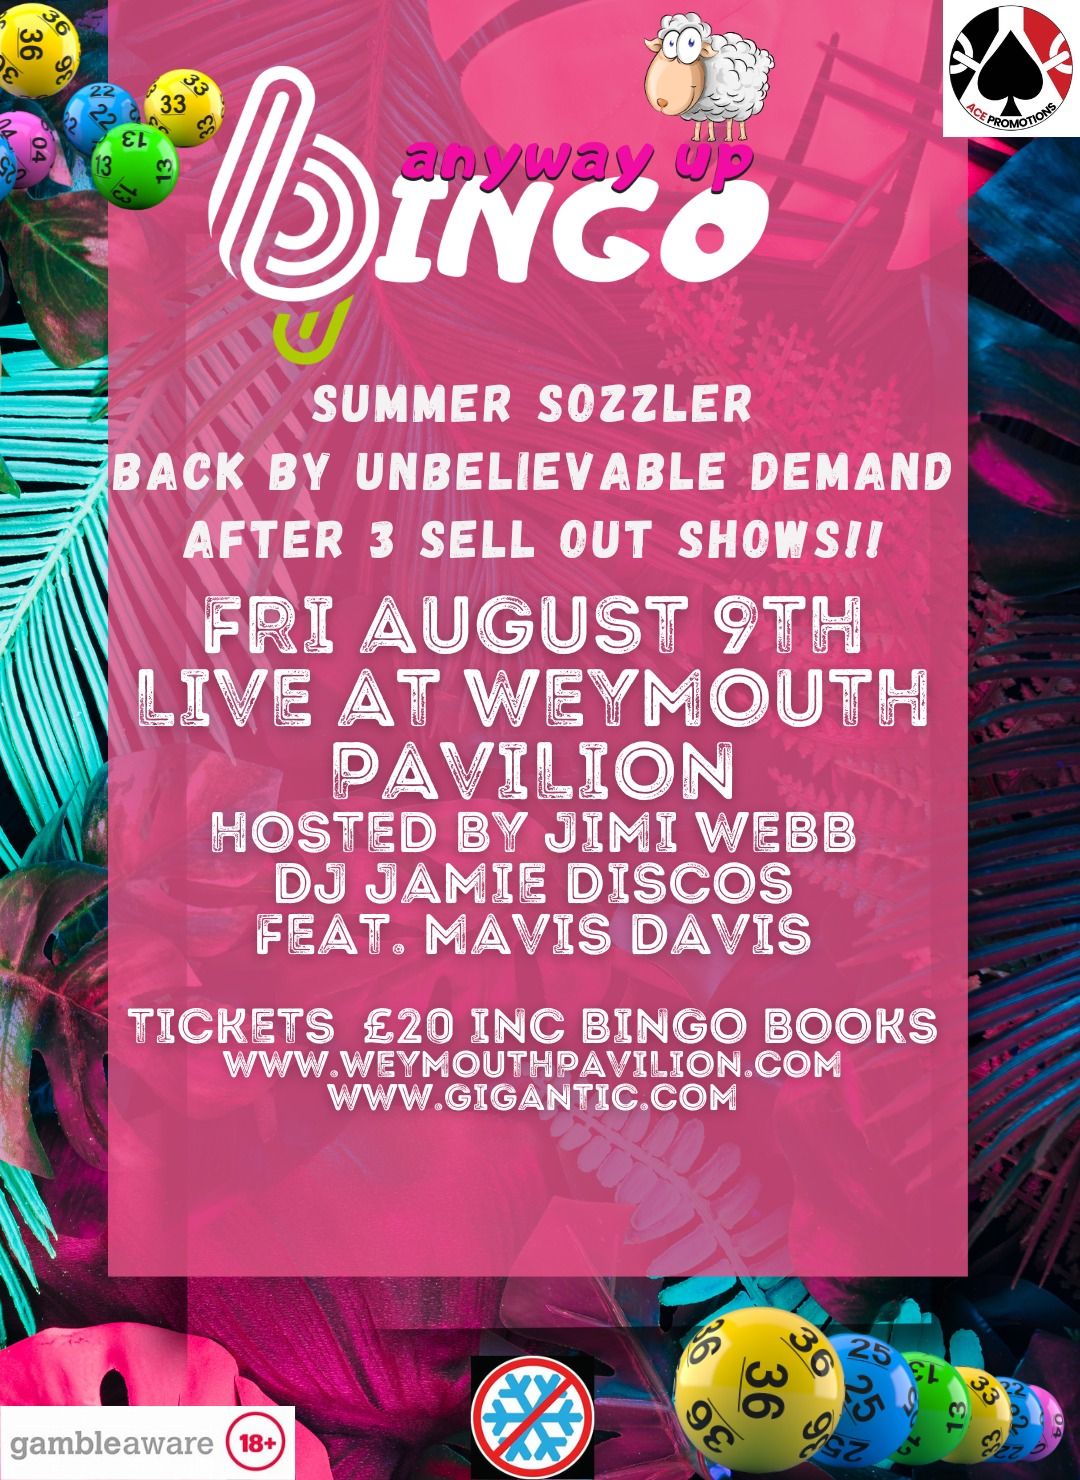 Summer Bingo Party with Anyway Up Bingo!